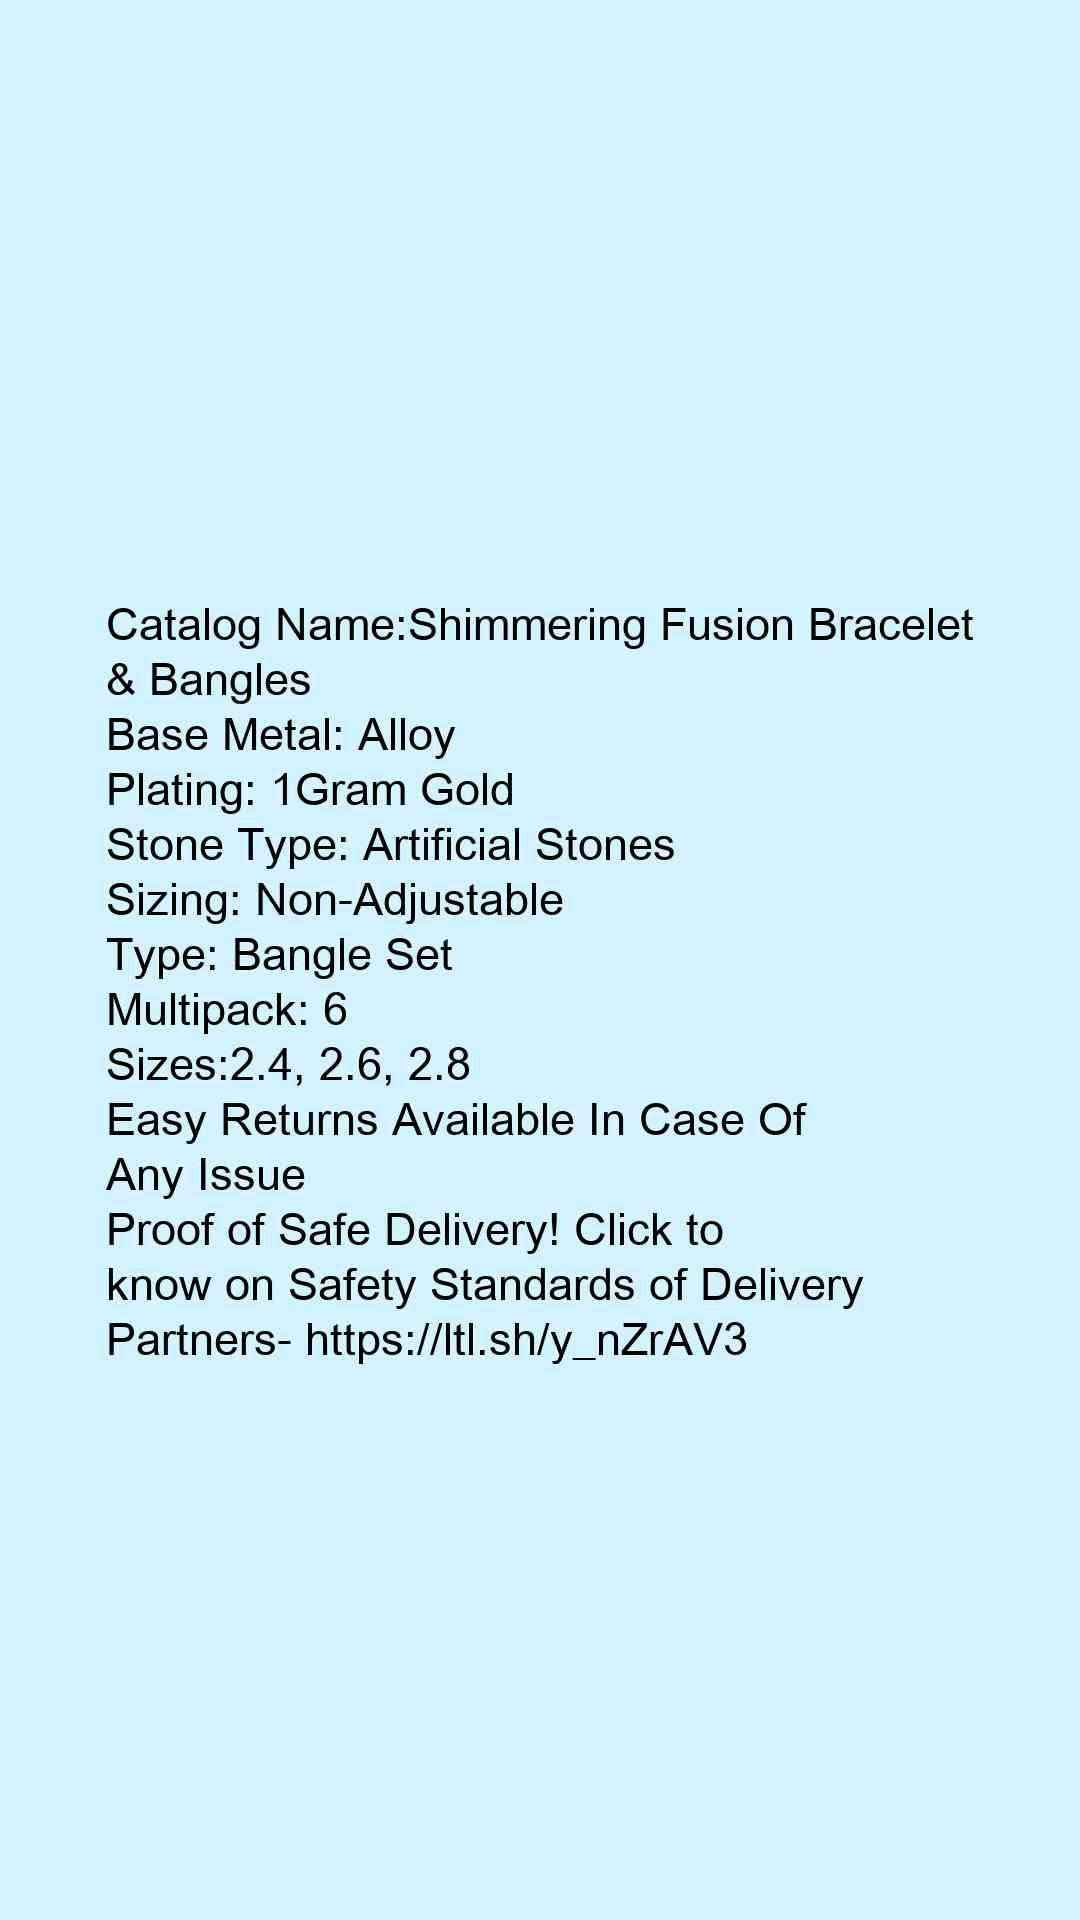 Shimmering Fusion Bracelet & Bangles - Faritha